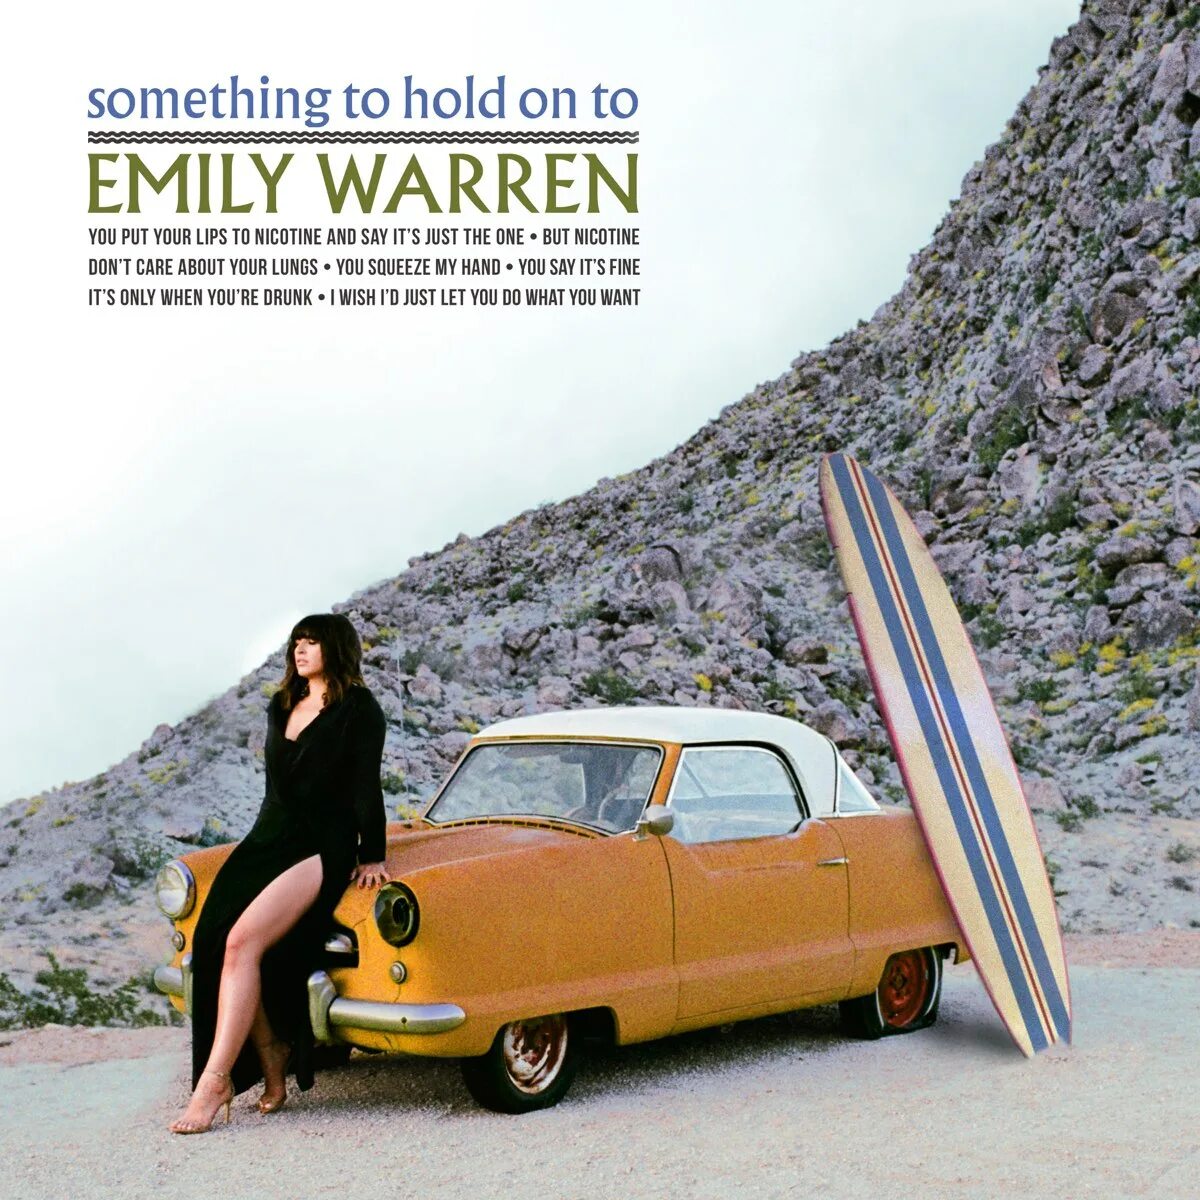 Emily Warren. Emily Warren певица. To hold something.